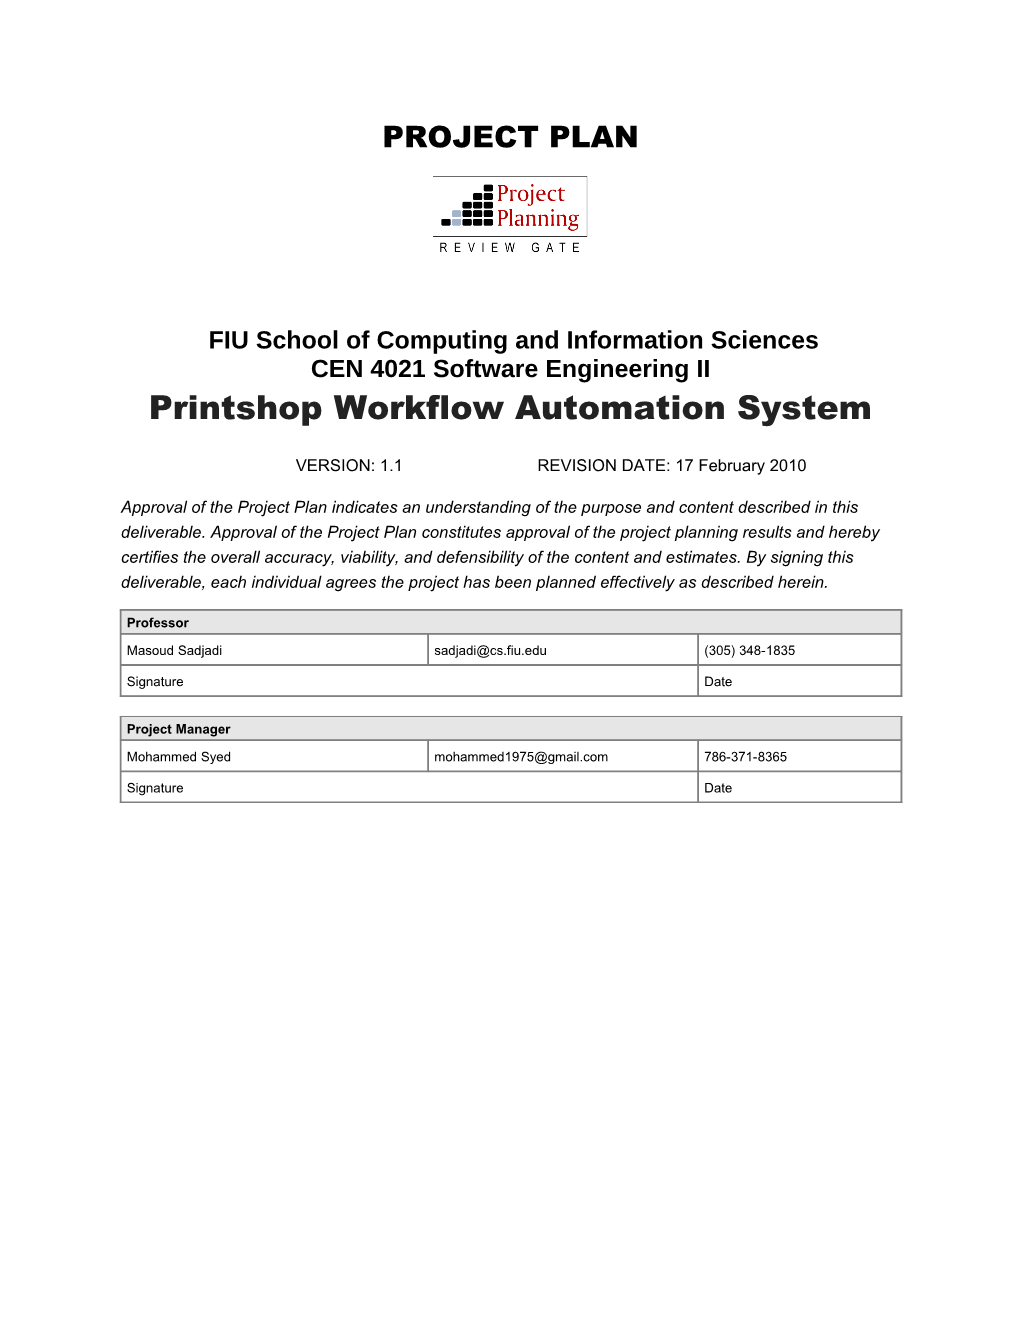 Printshop Workflow Automation System